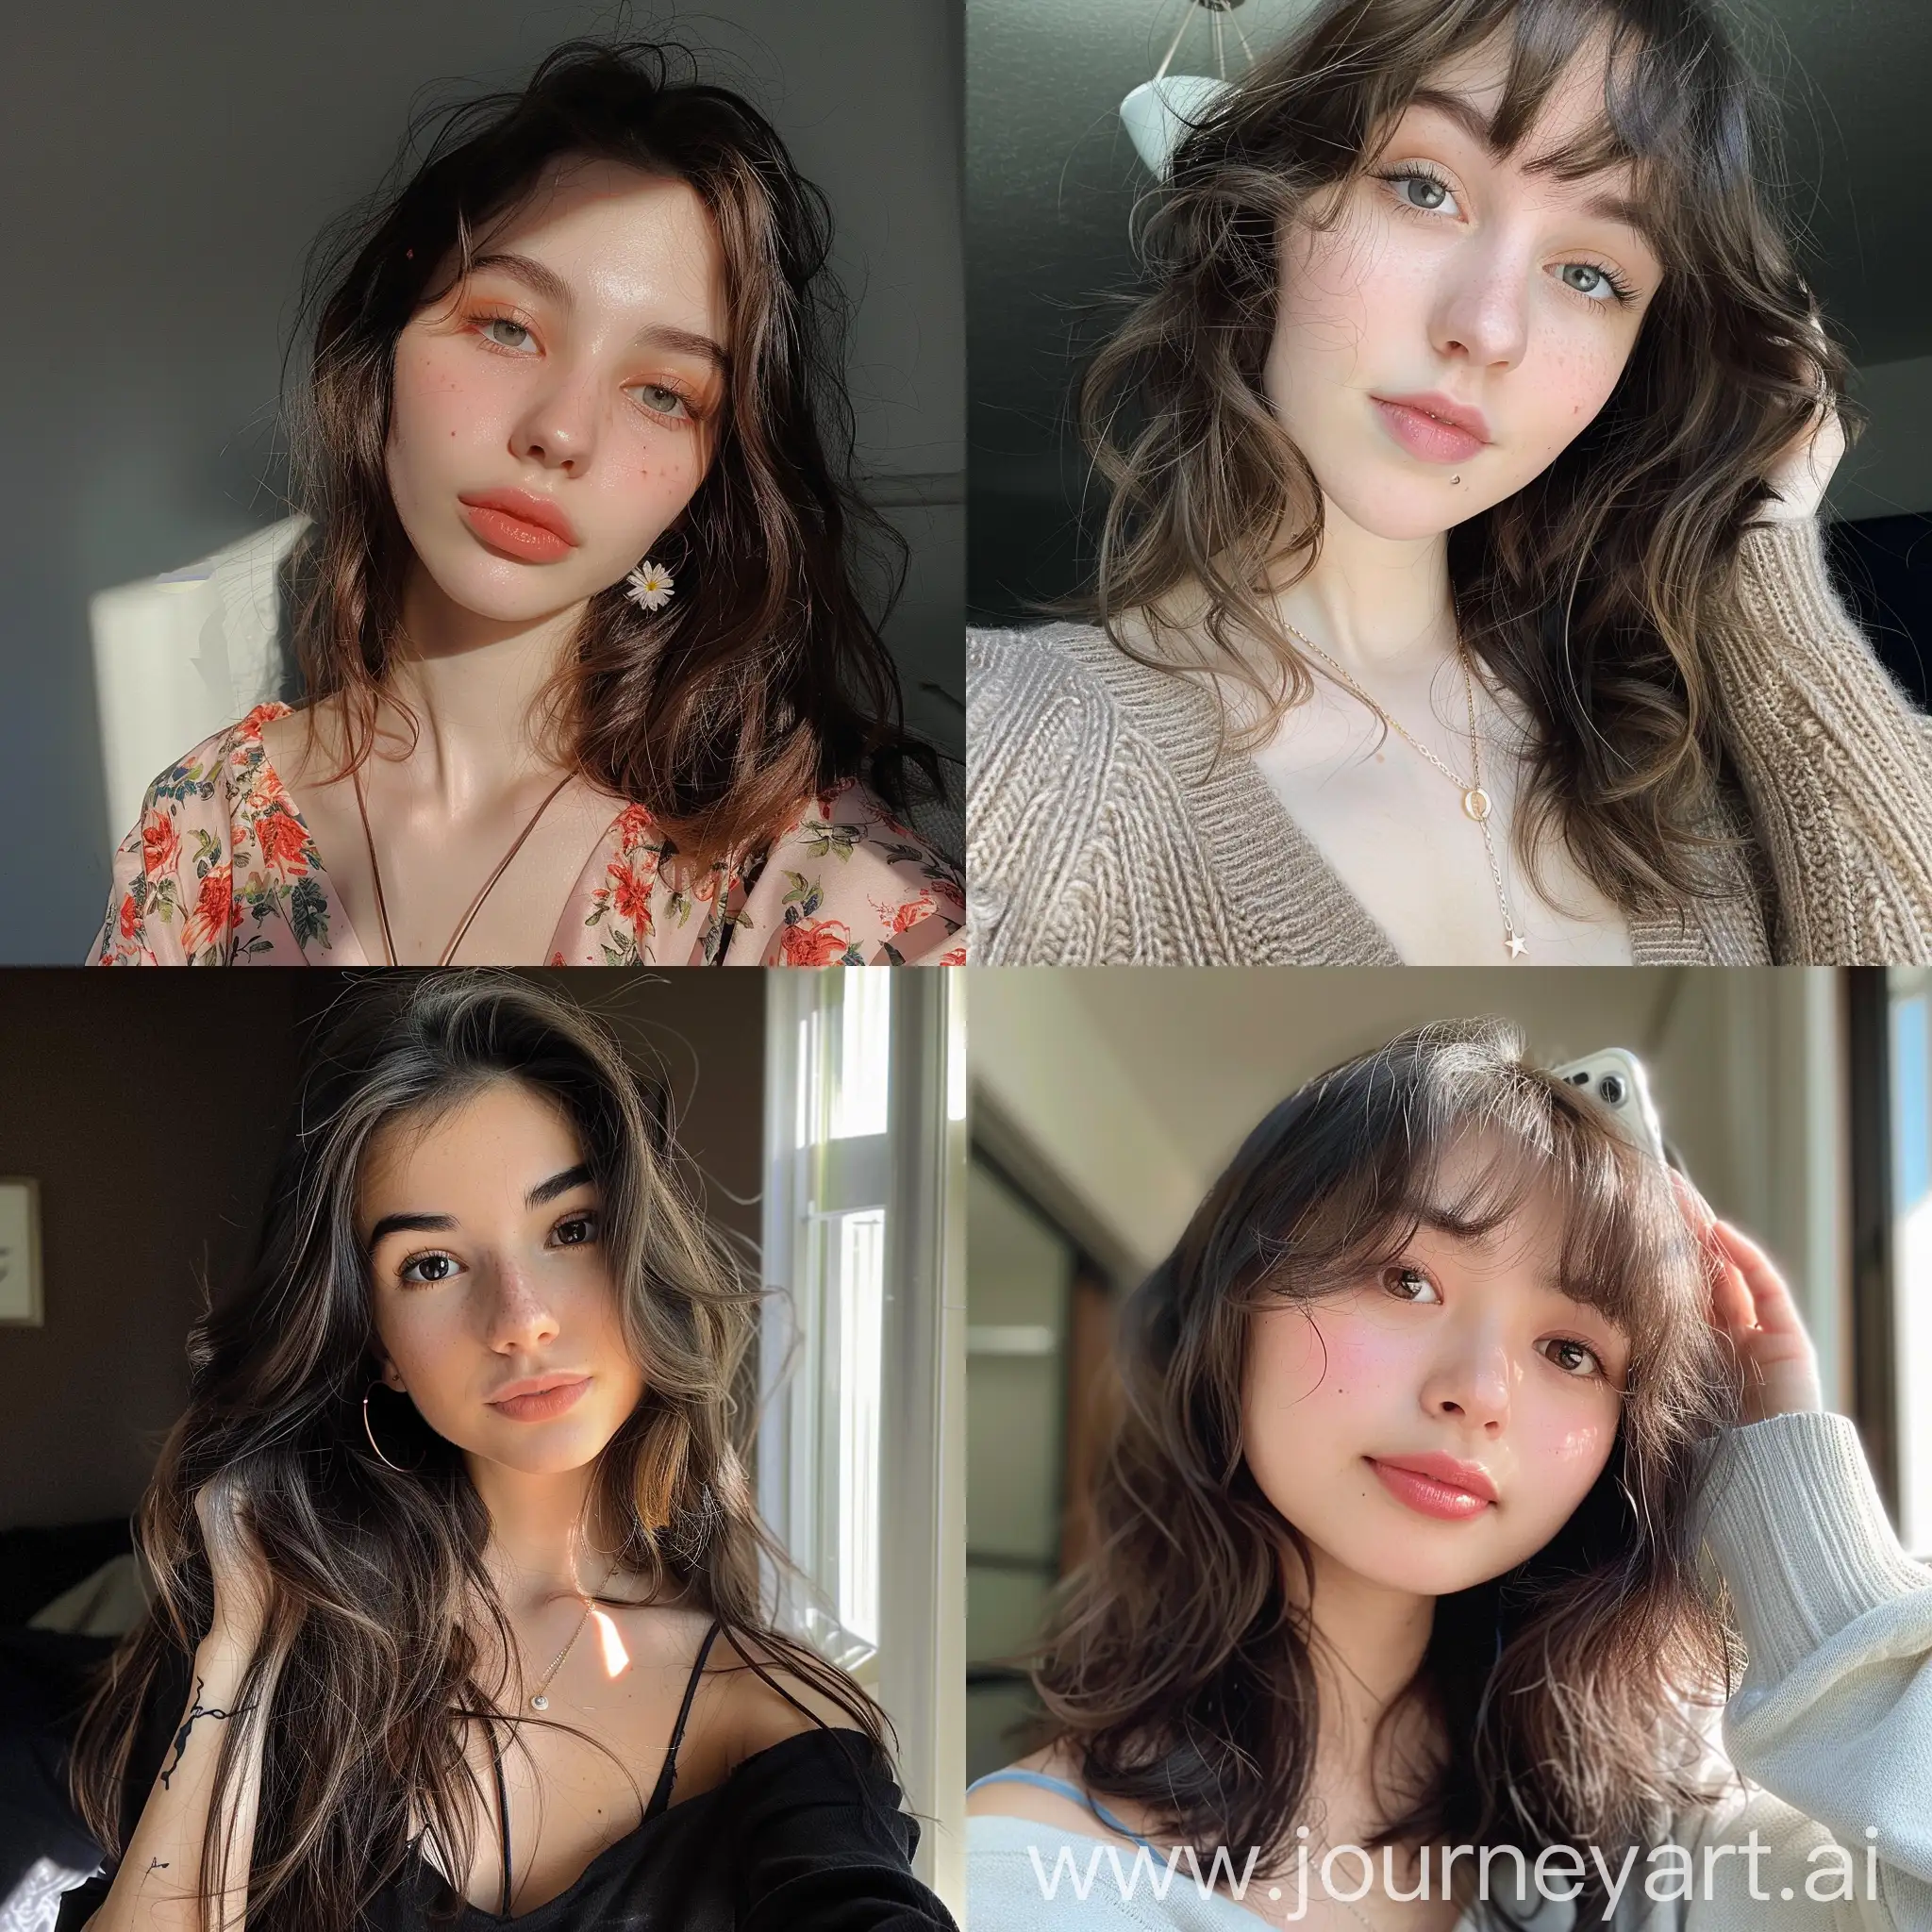 Aesthetic Instagram selfie of a girl 